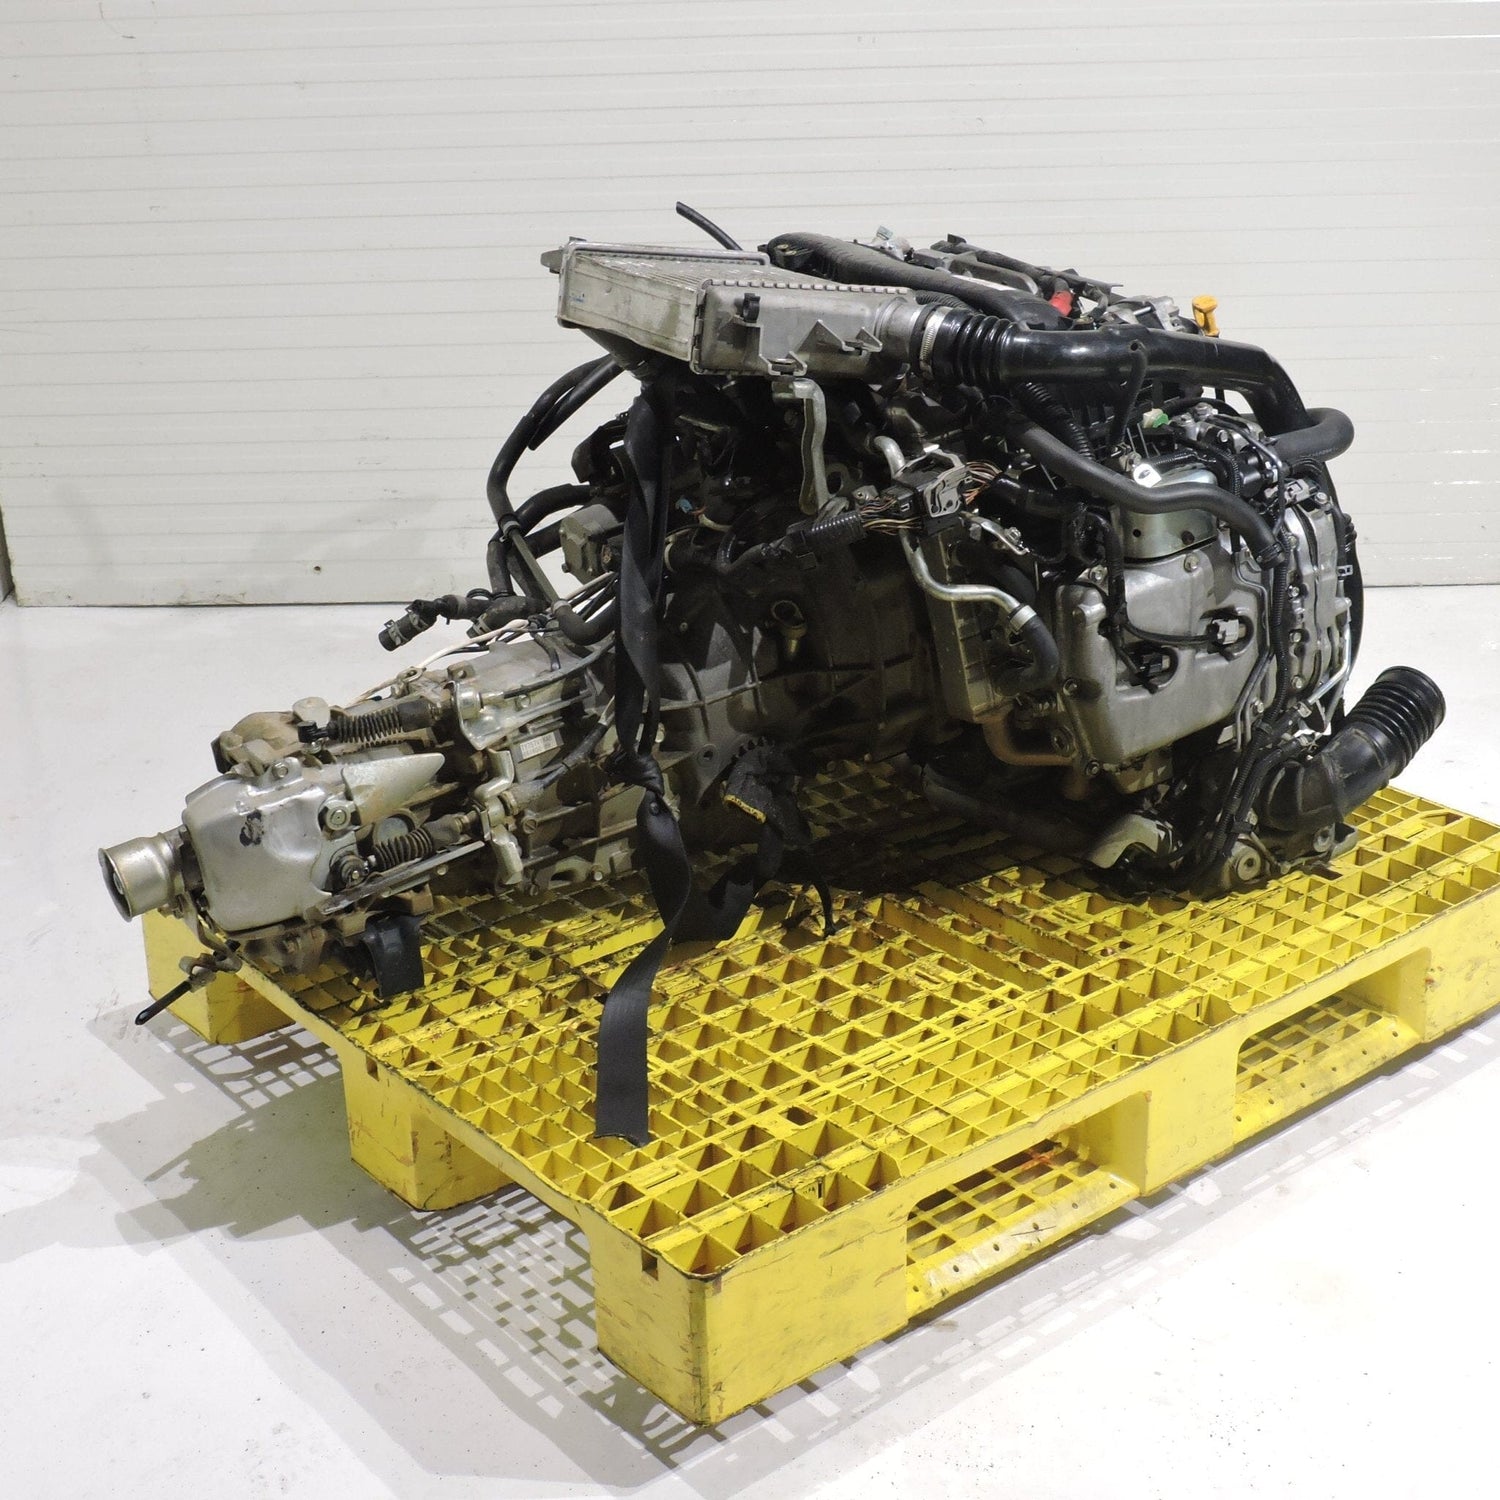 Subaru Forester 2009-2013 2.0L Turbo Diesel Manual JDM Engine Transmission Swap - EE20